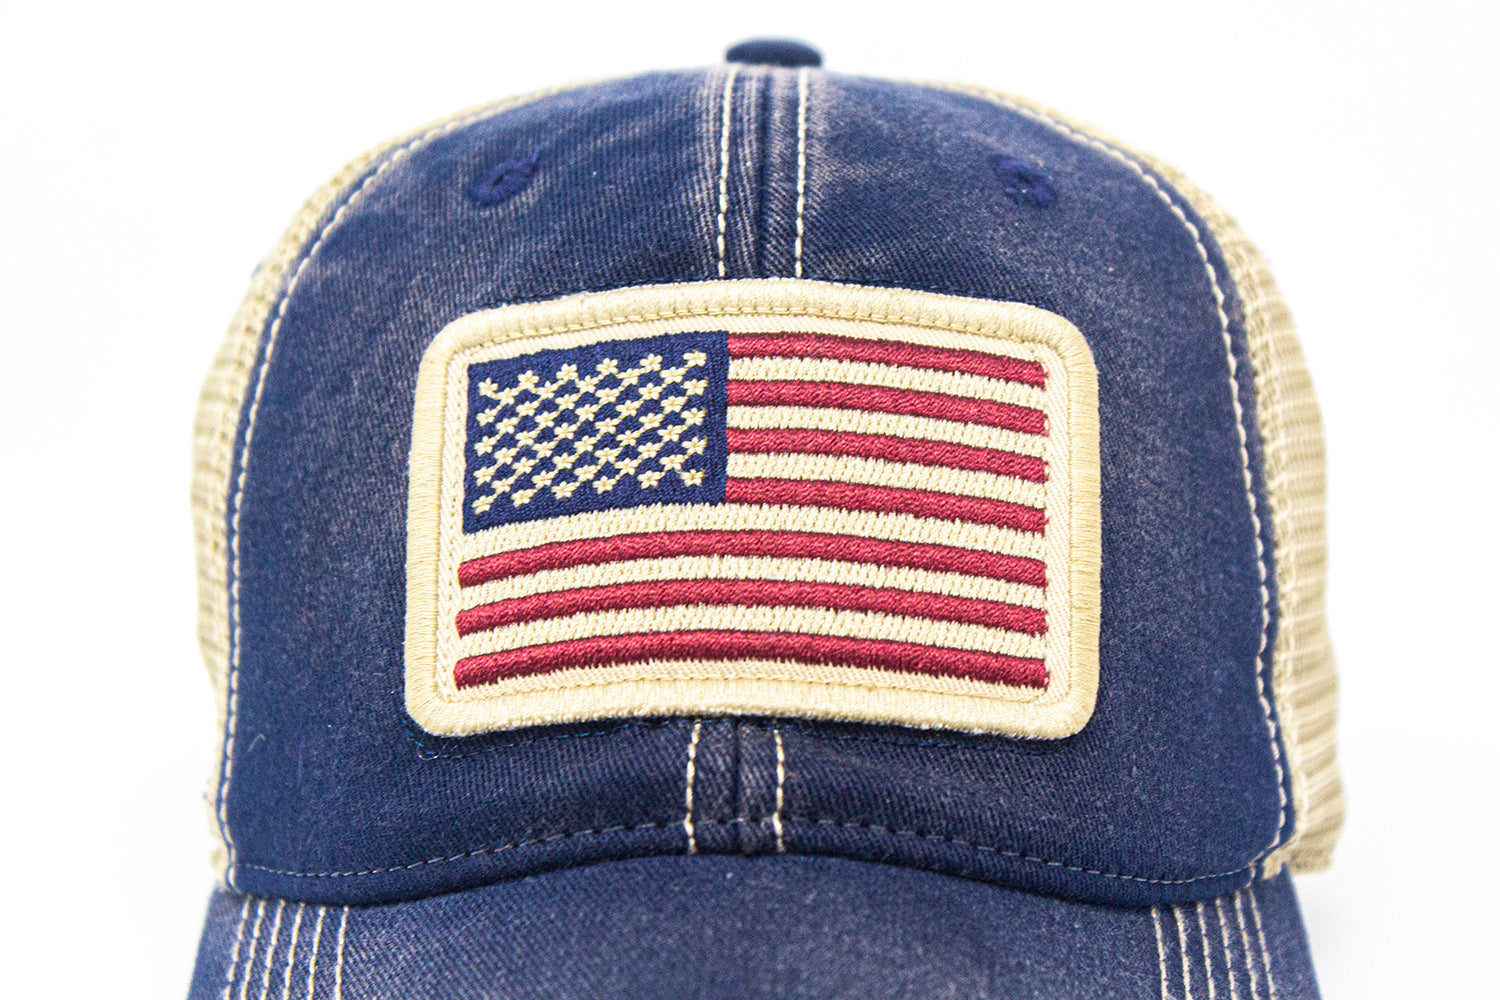 USA Flag Patch Trucker Hat, Navy